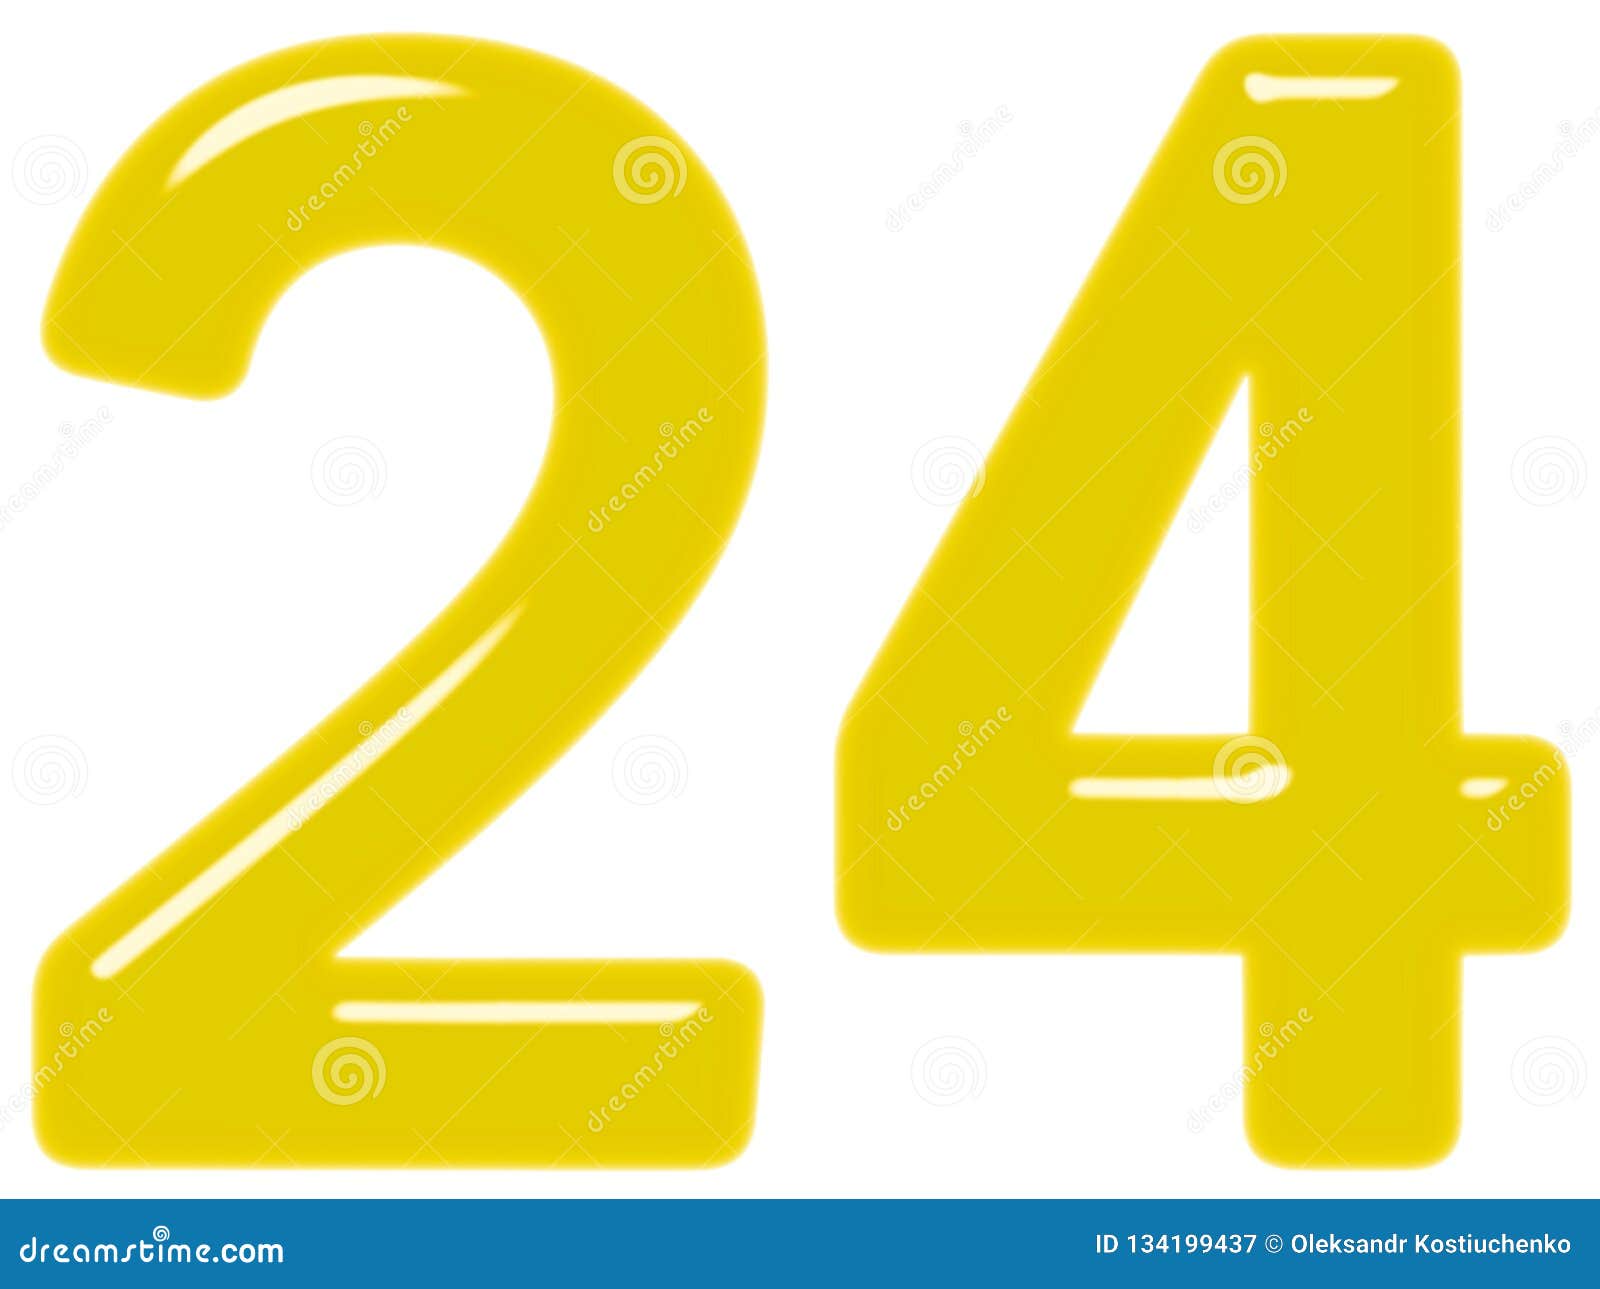 24 апреля 22 года. Цифра 24. Цифра 24 на фоне. Цифра 24 Золотая. 24 Цифры желтая.